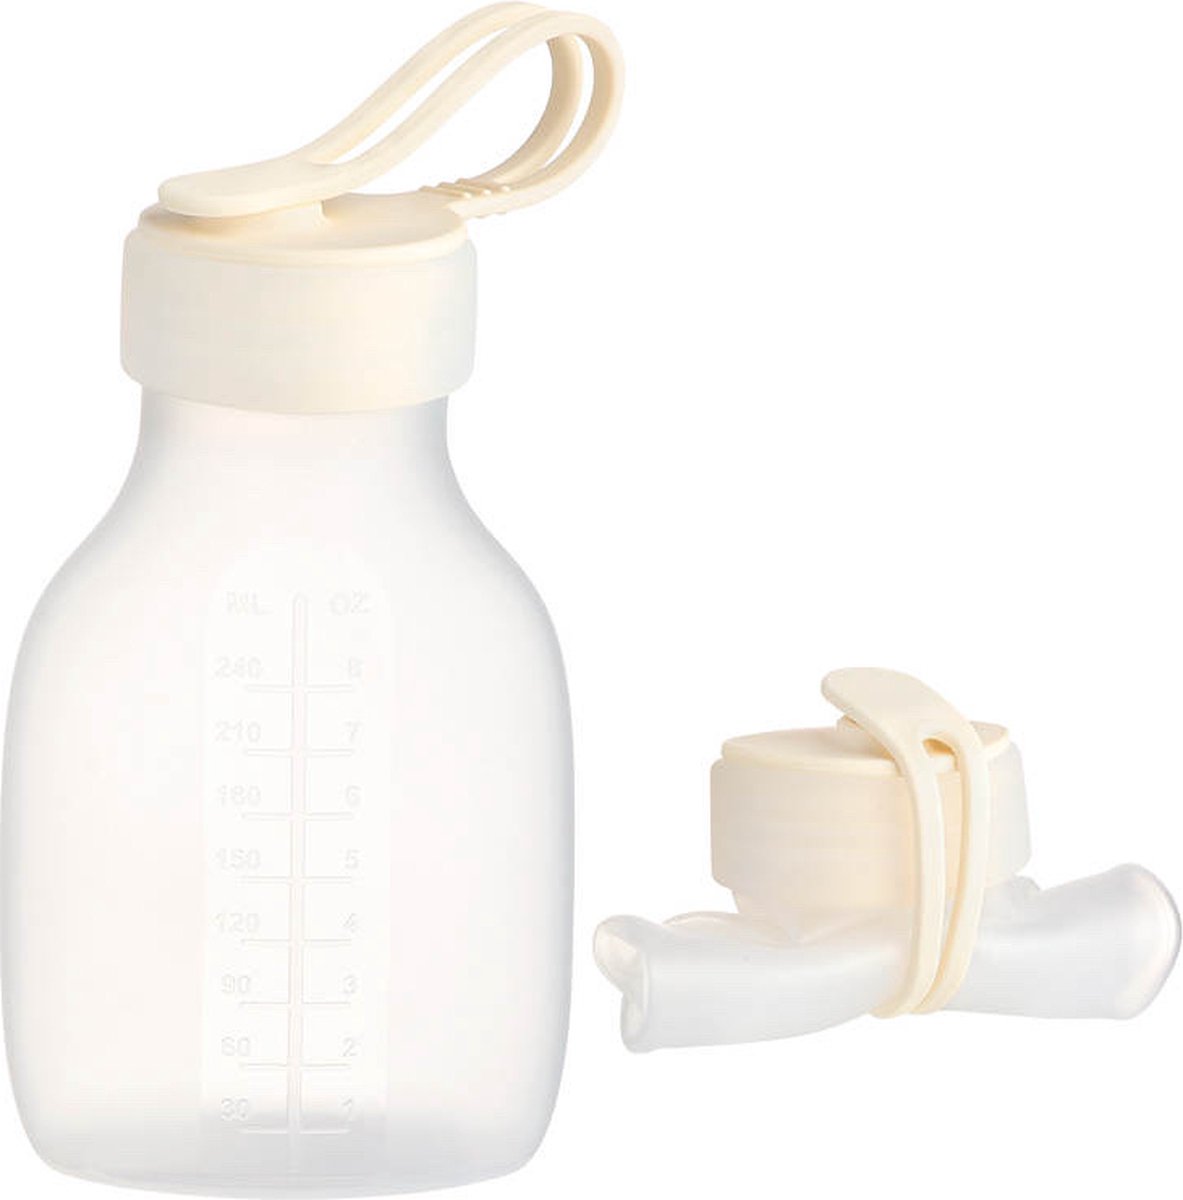 Mom Finity Herbruikbare Siliconen Moedermelk Opbergzakken - 240ml - BPA-vrij - Lekvrij - Set van 2 - Wit